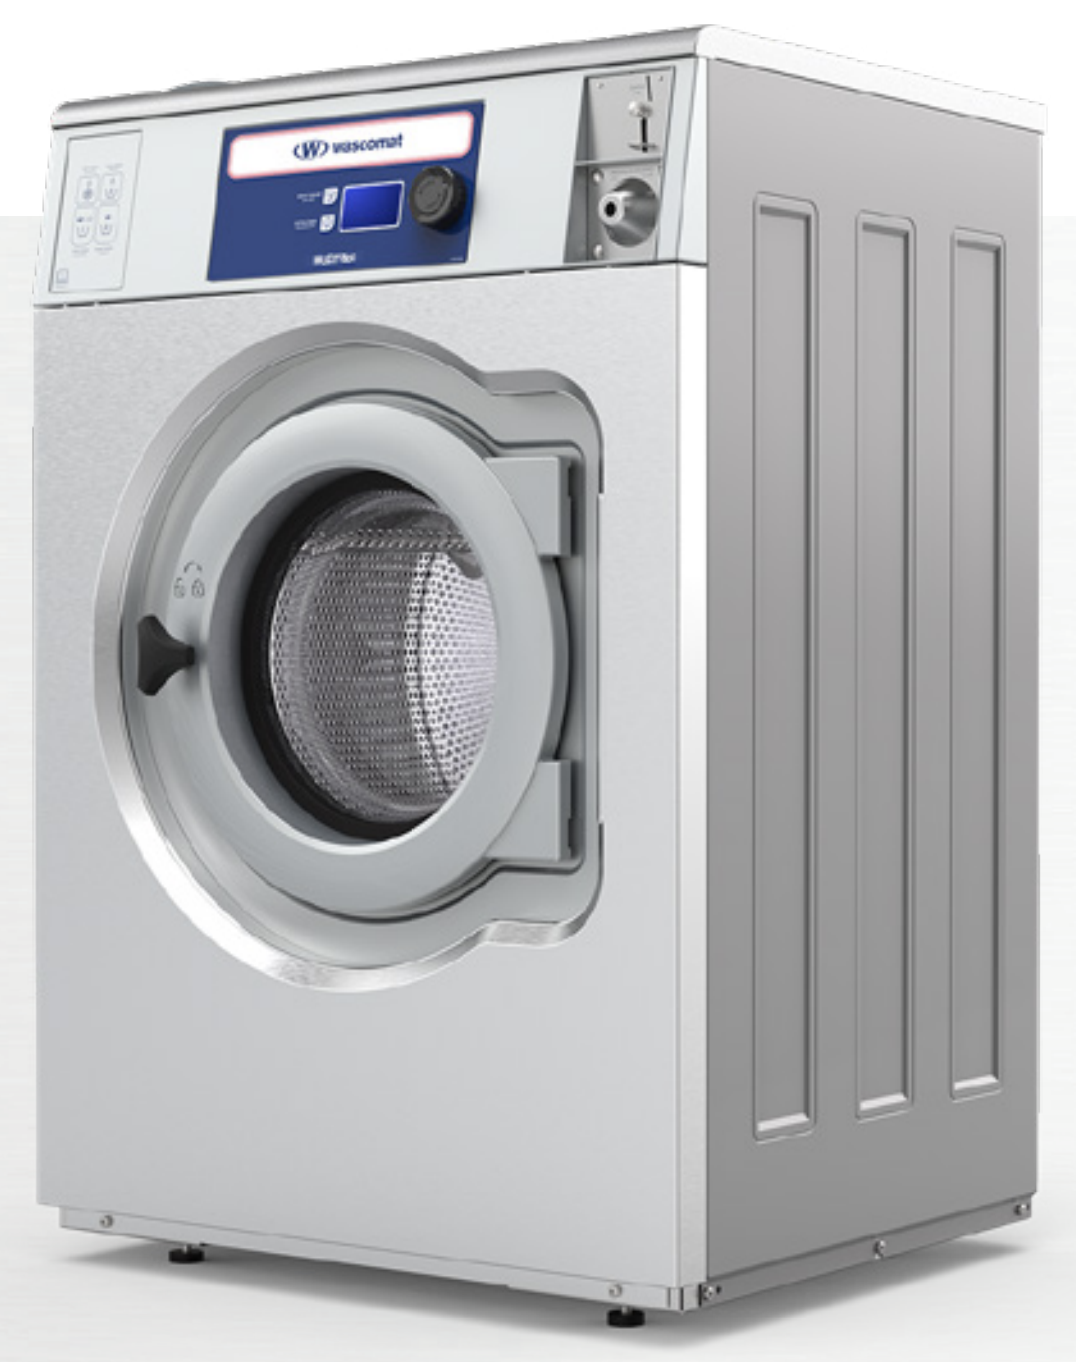 New 2022 Wascomat Wud730 - Lakeside Laundry Equipment